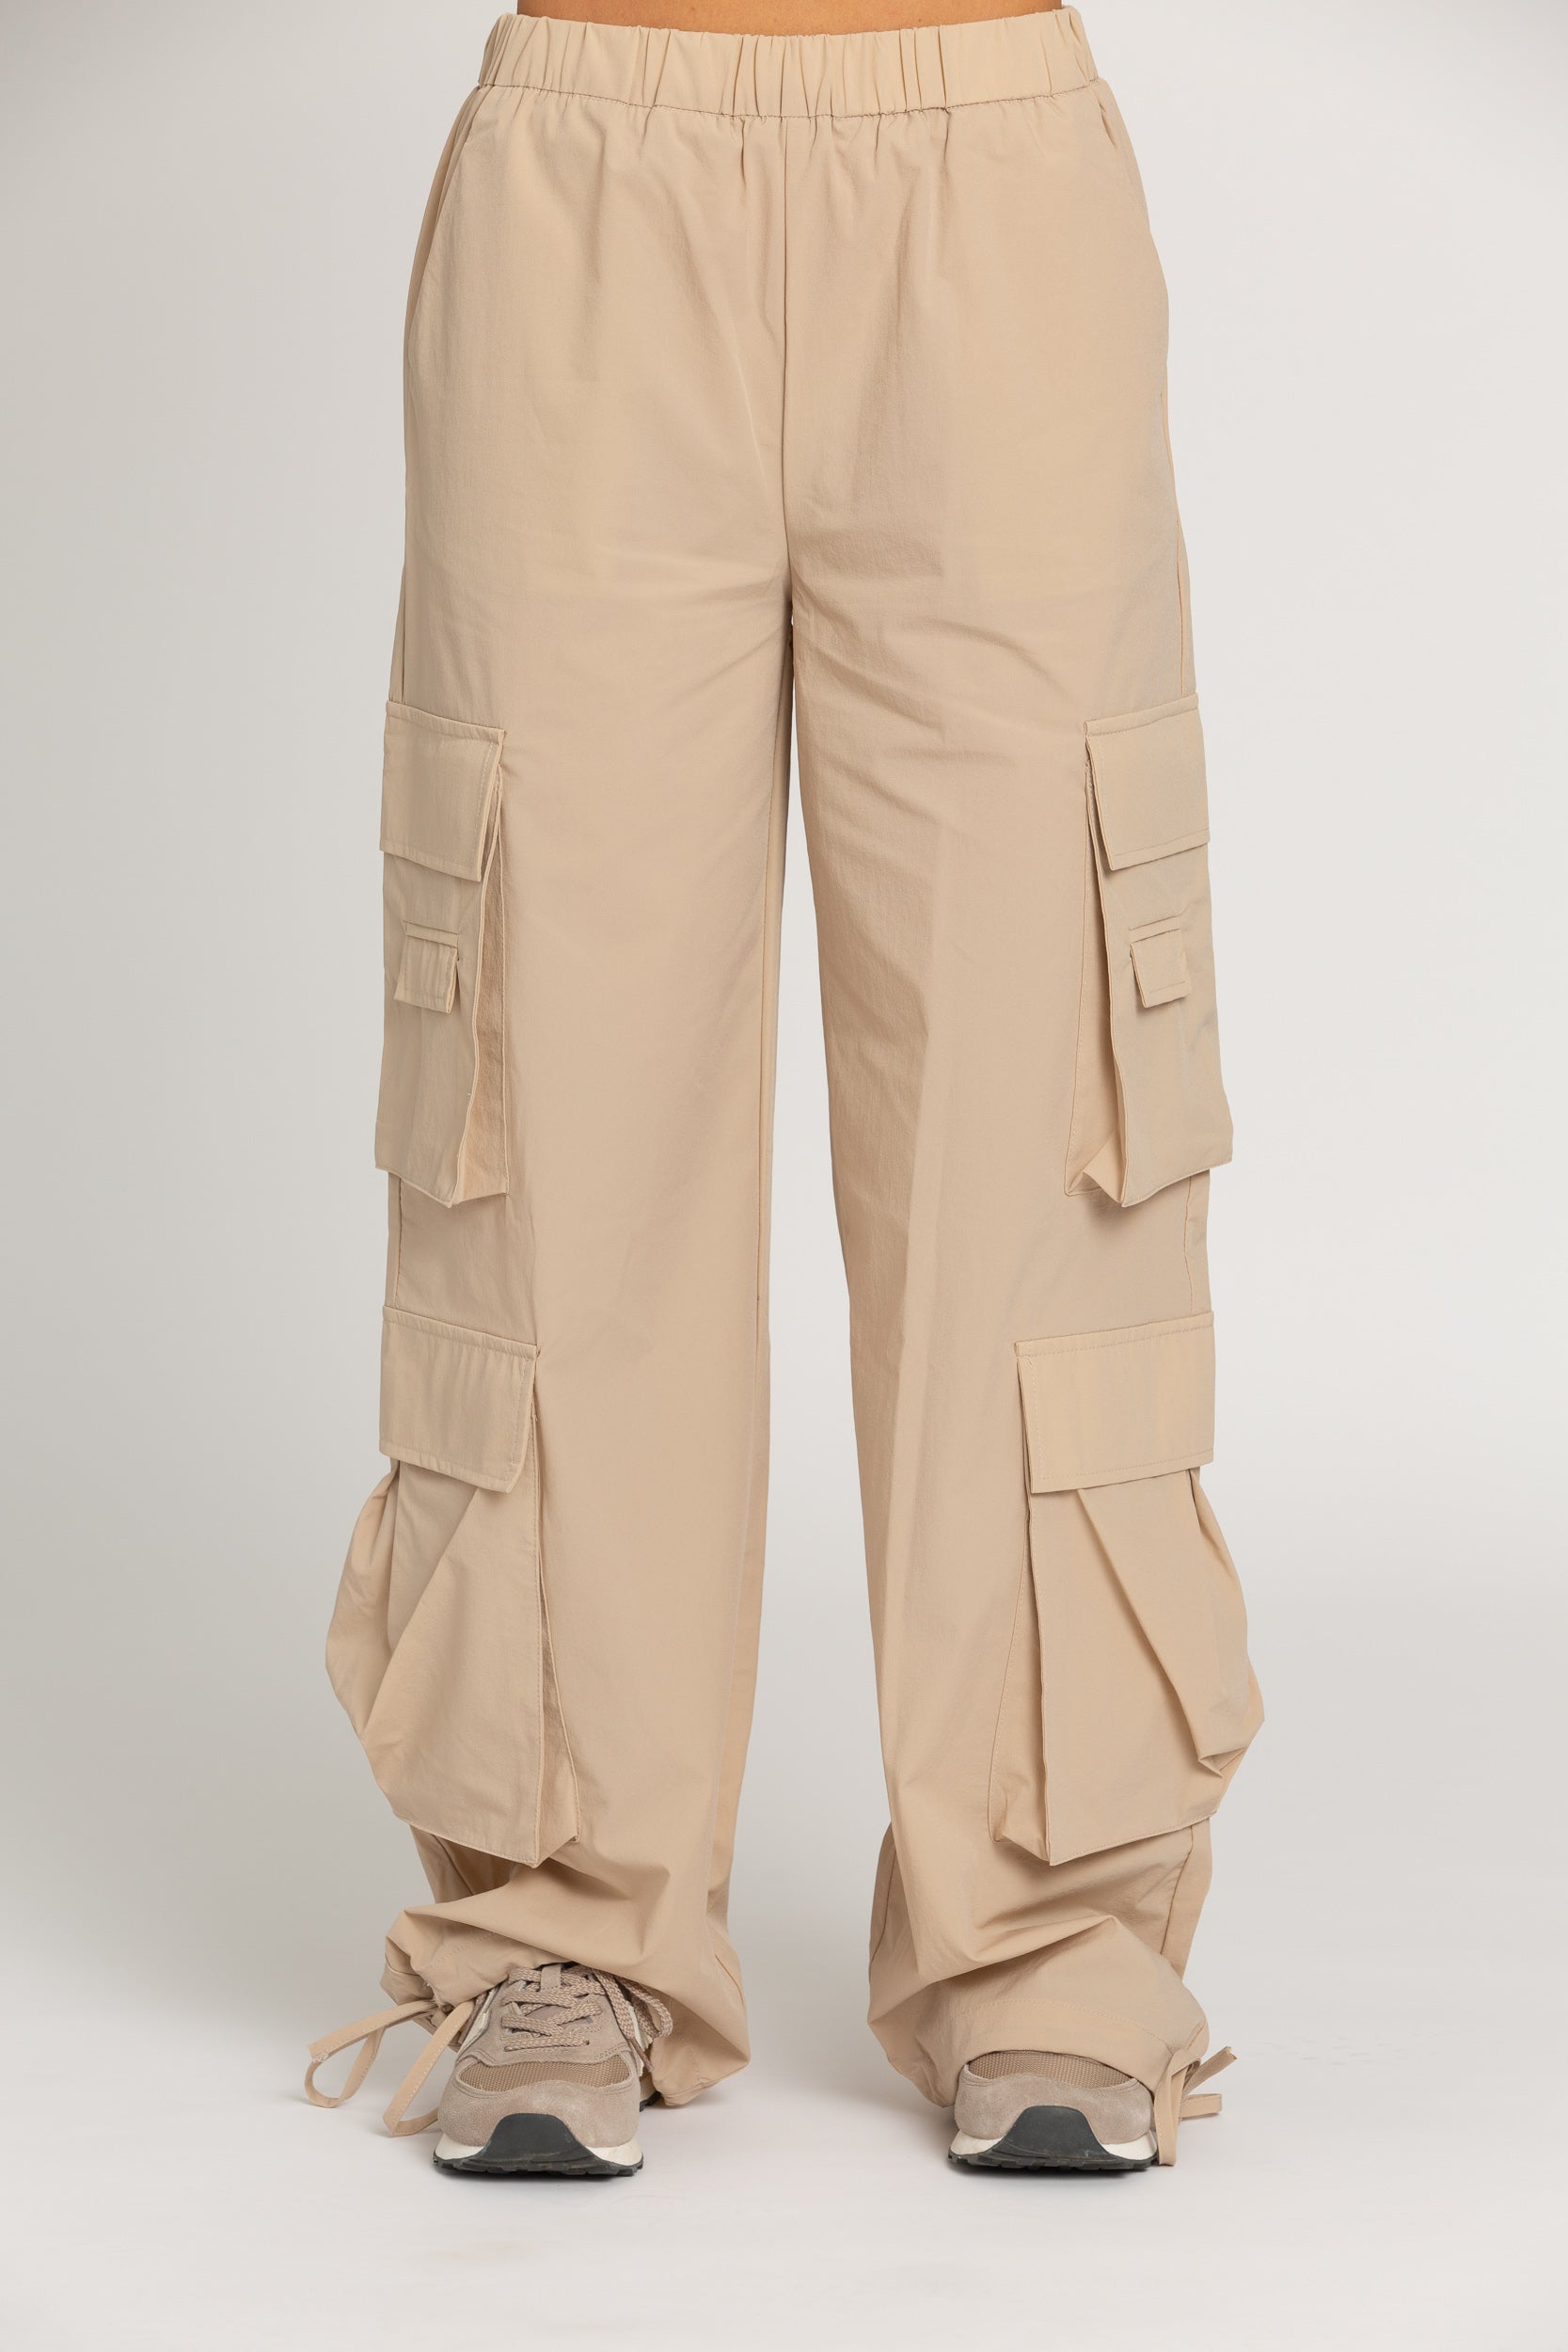 Desert Sand Parachute Pants – Gold Hinge